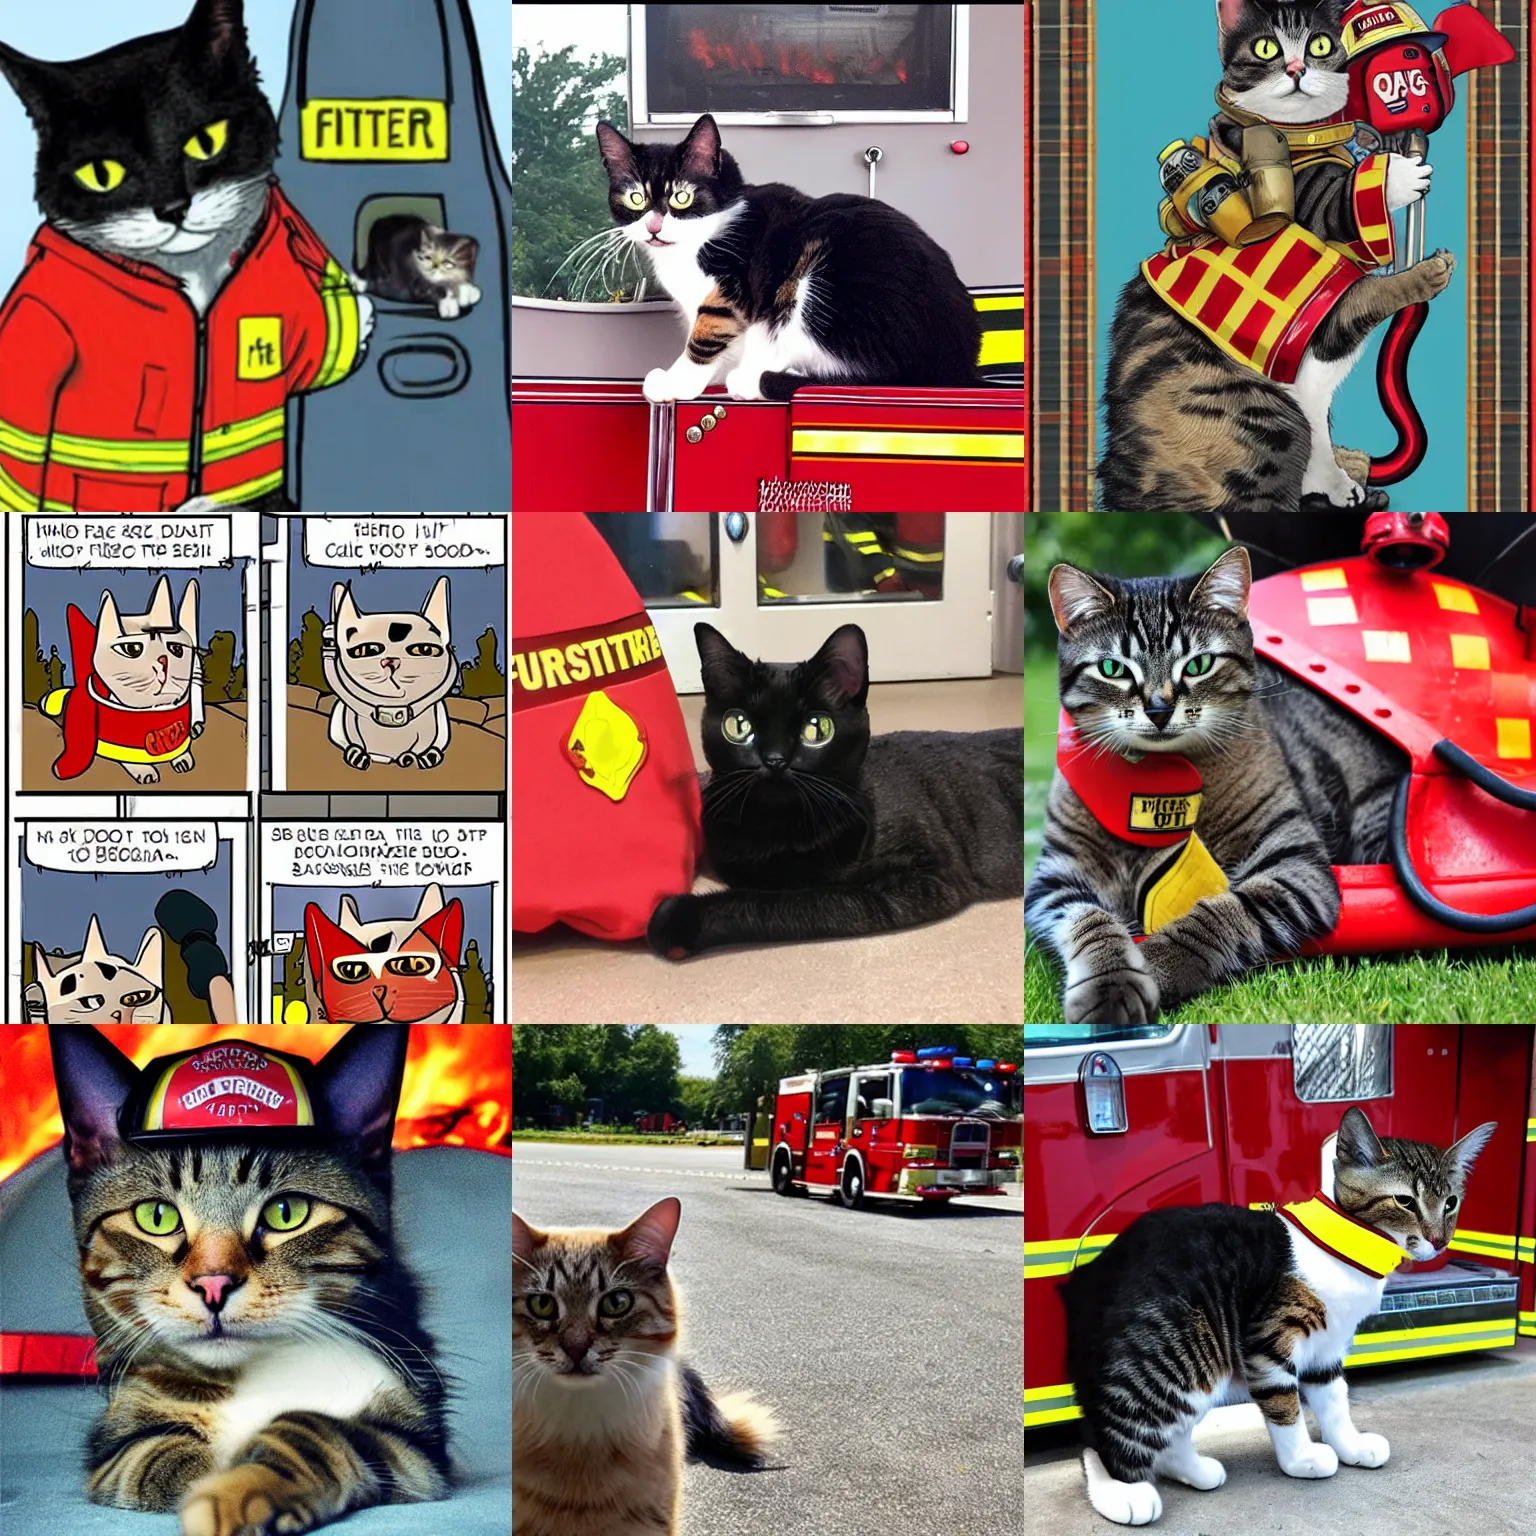 Prompt: cat as a firefighter saving queen - dog